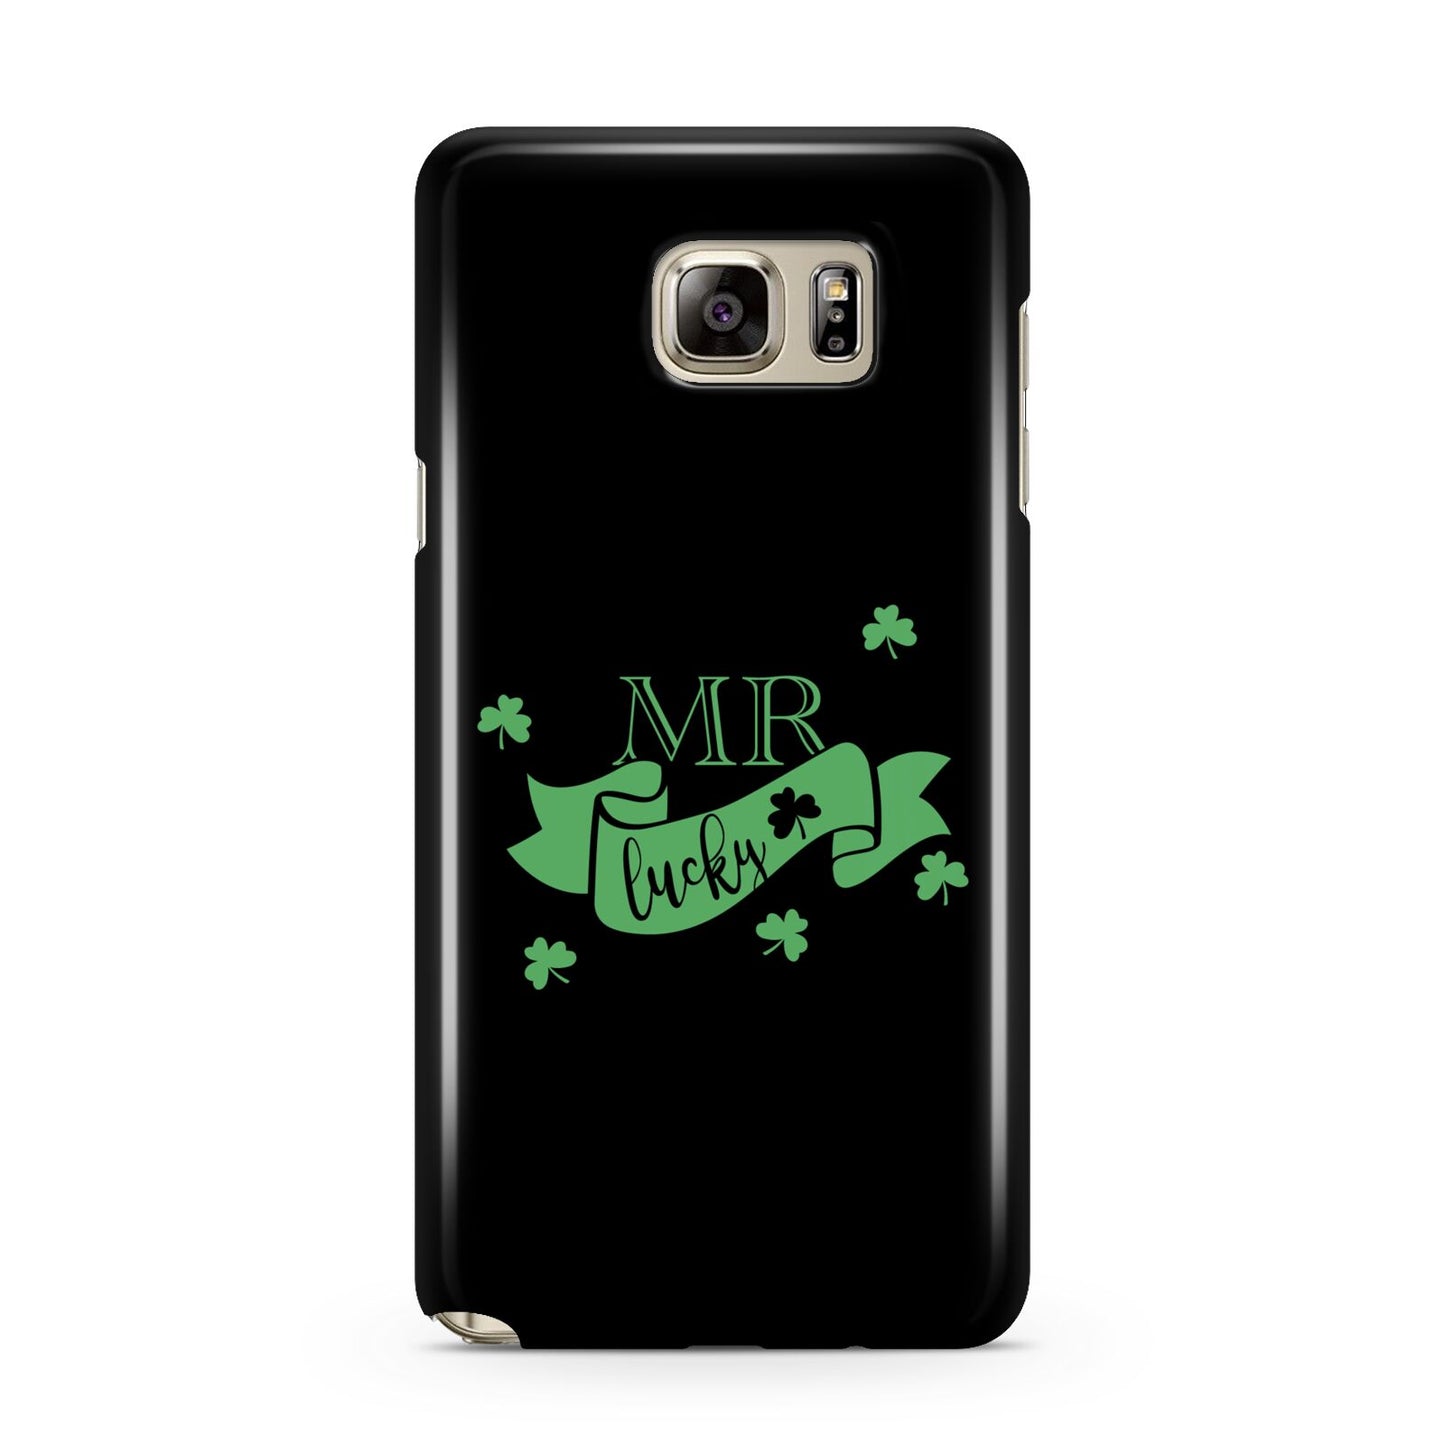 Mr Lucky Samsung Galaxy Note 5 Case